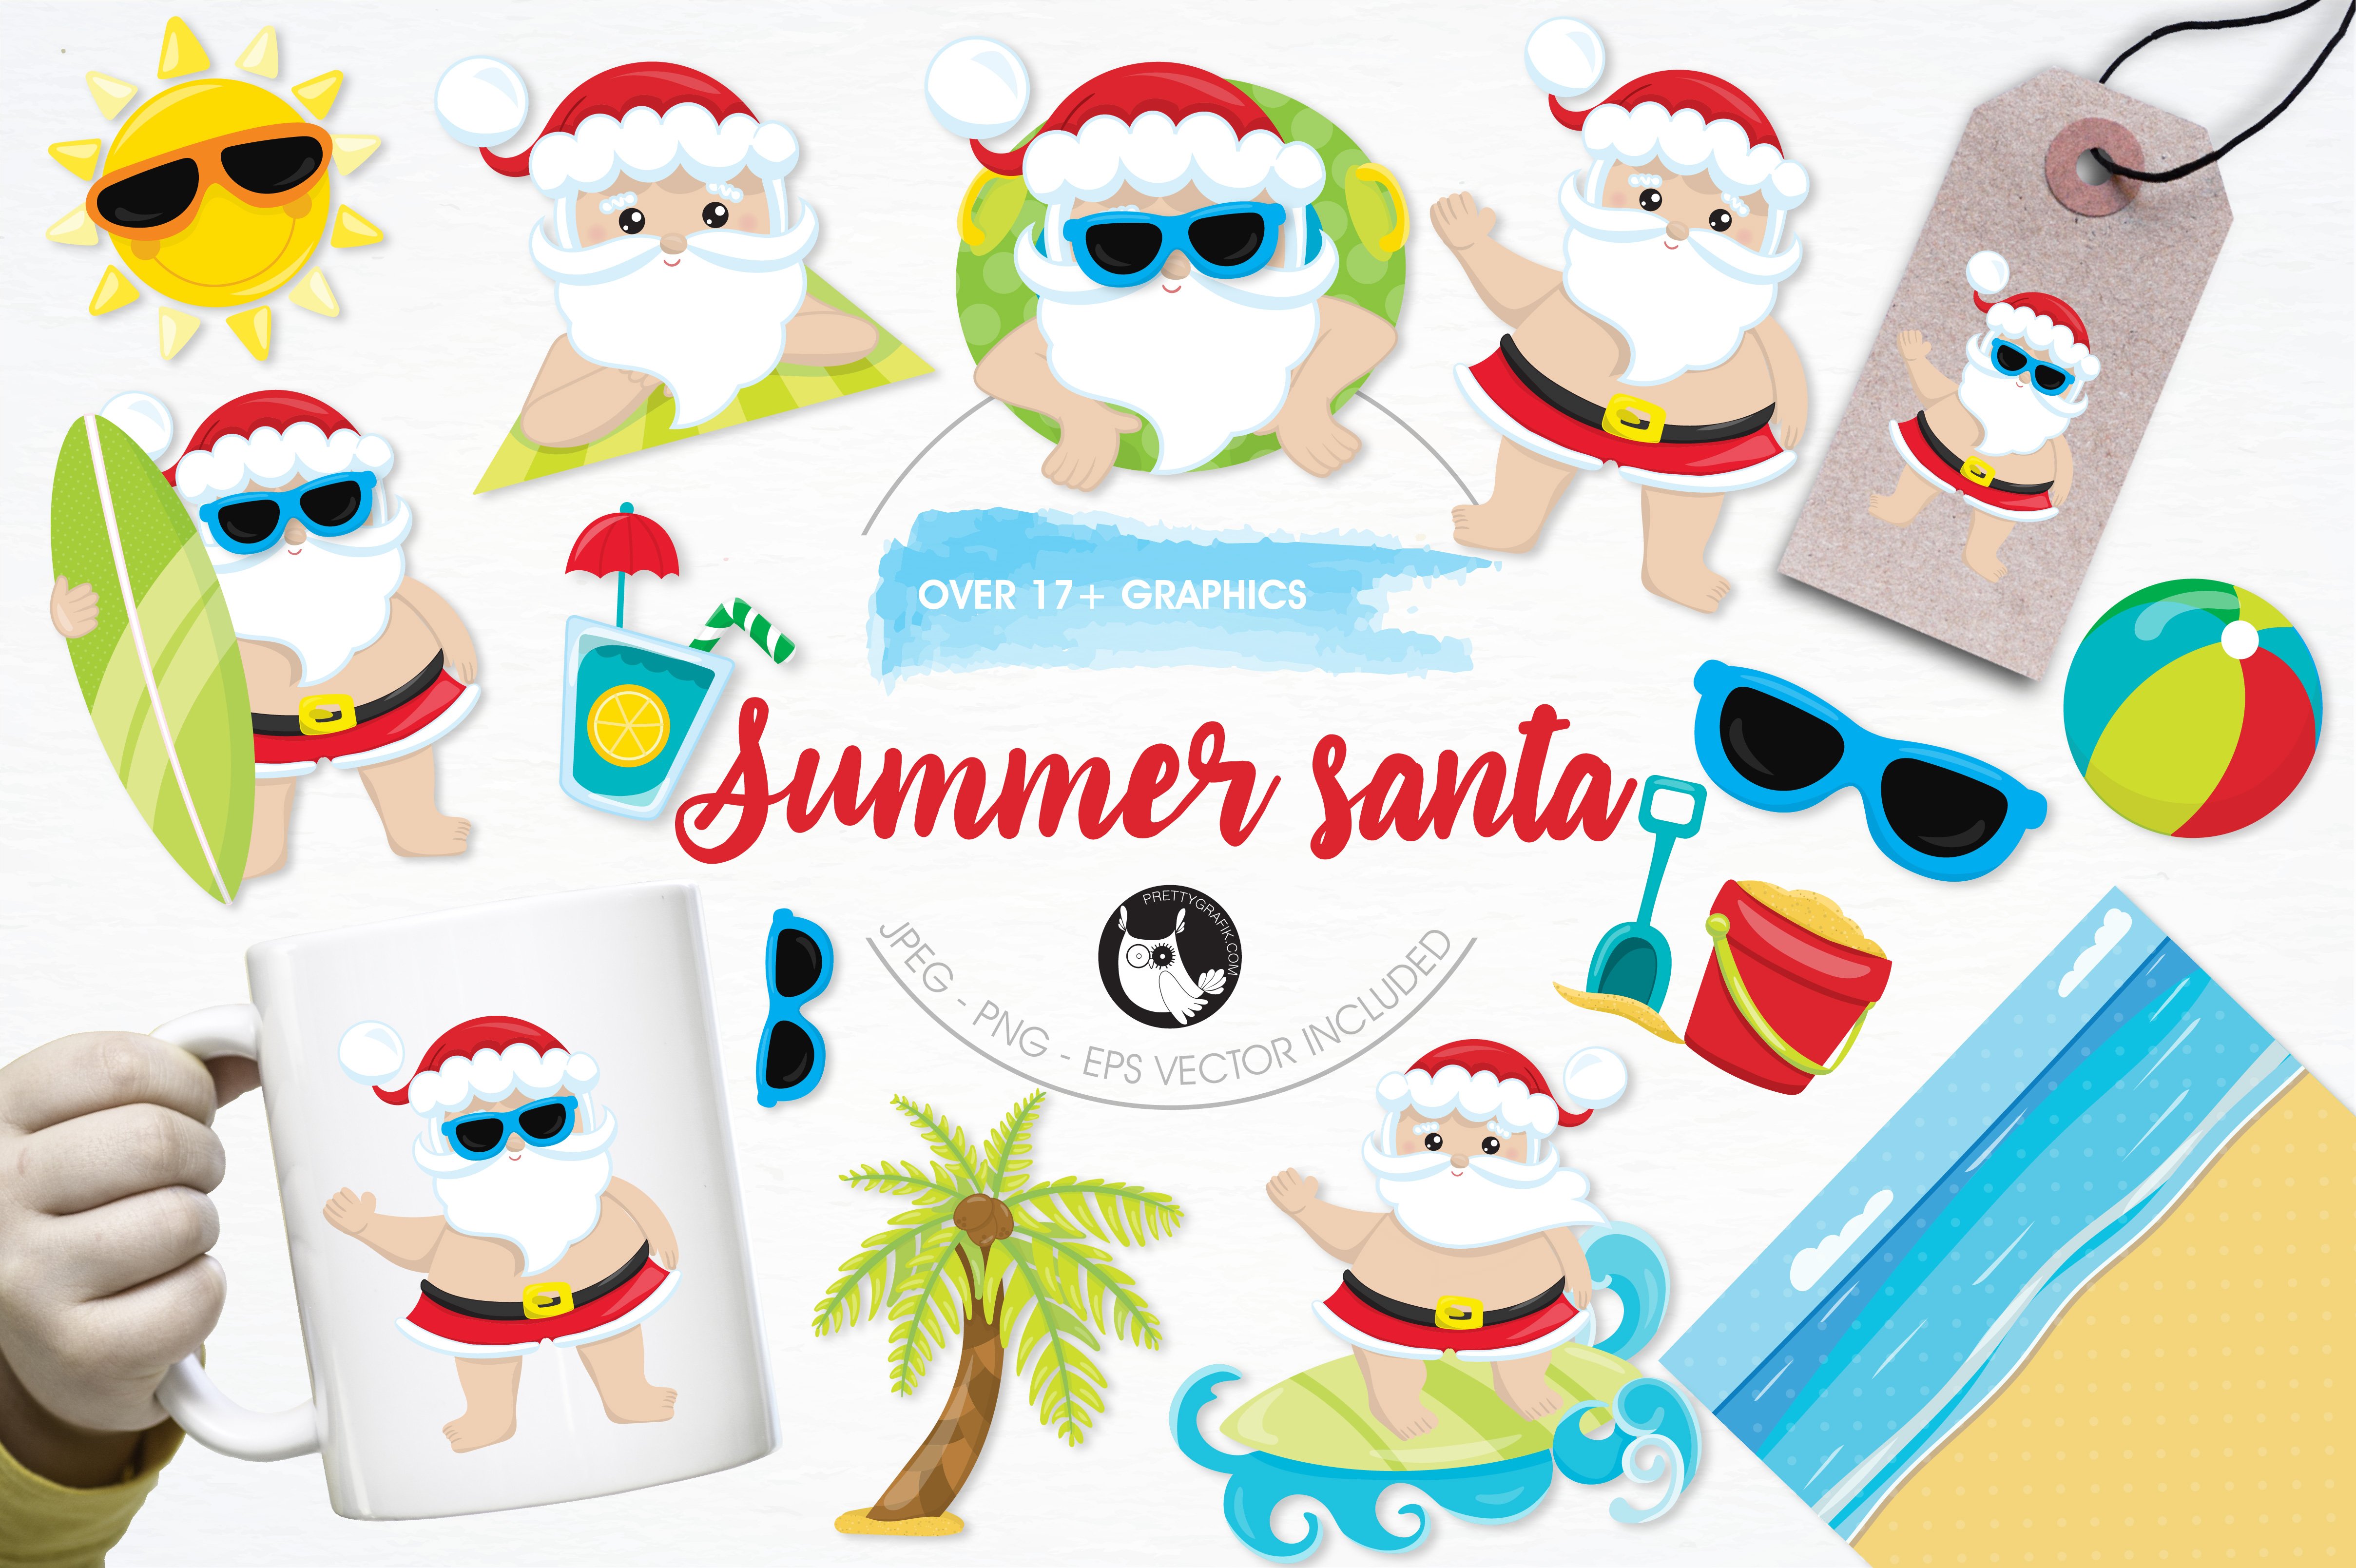 Summer santa illustration pack - Vector Image